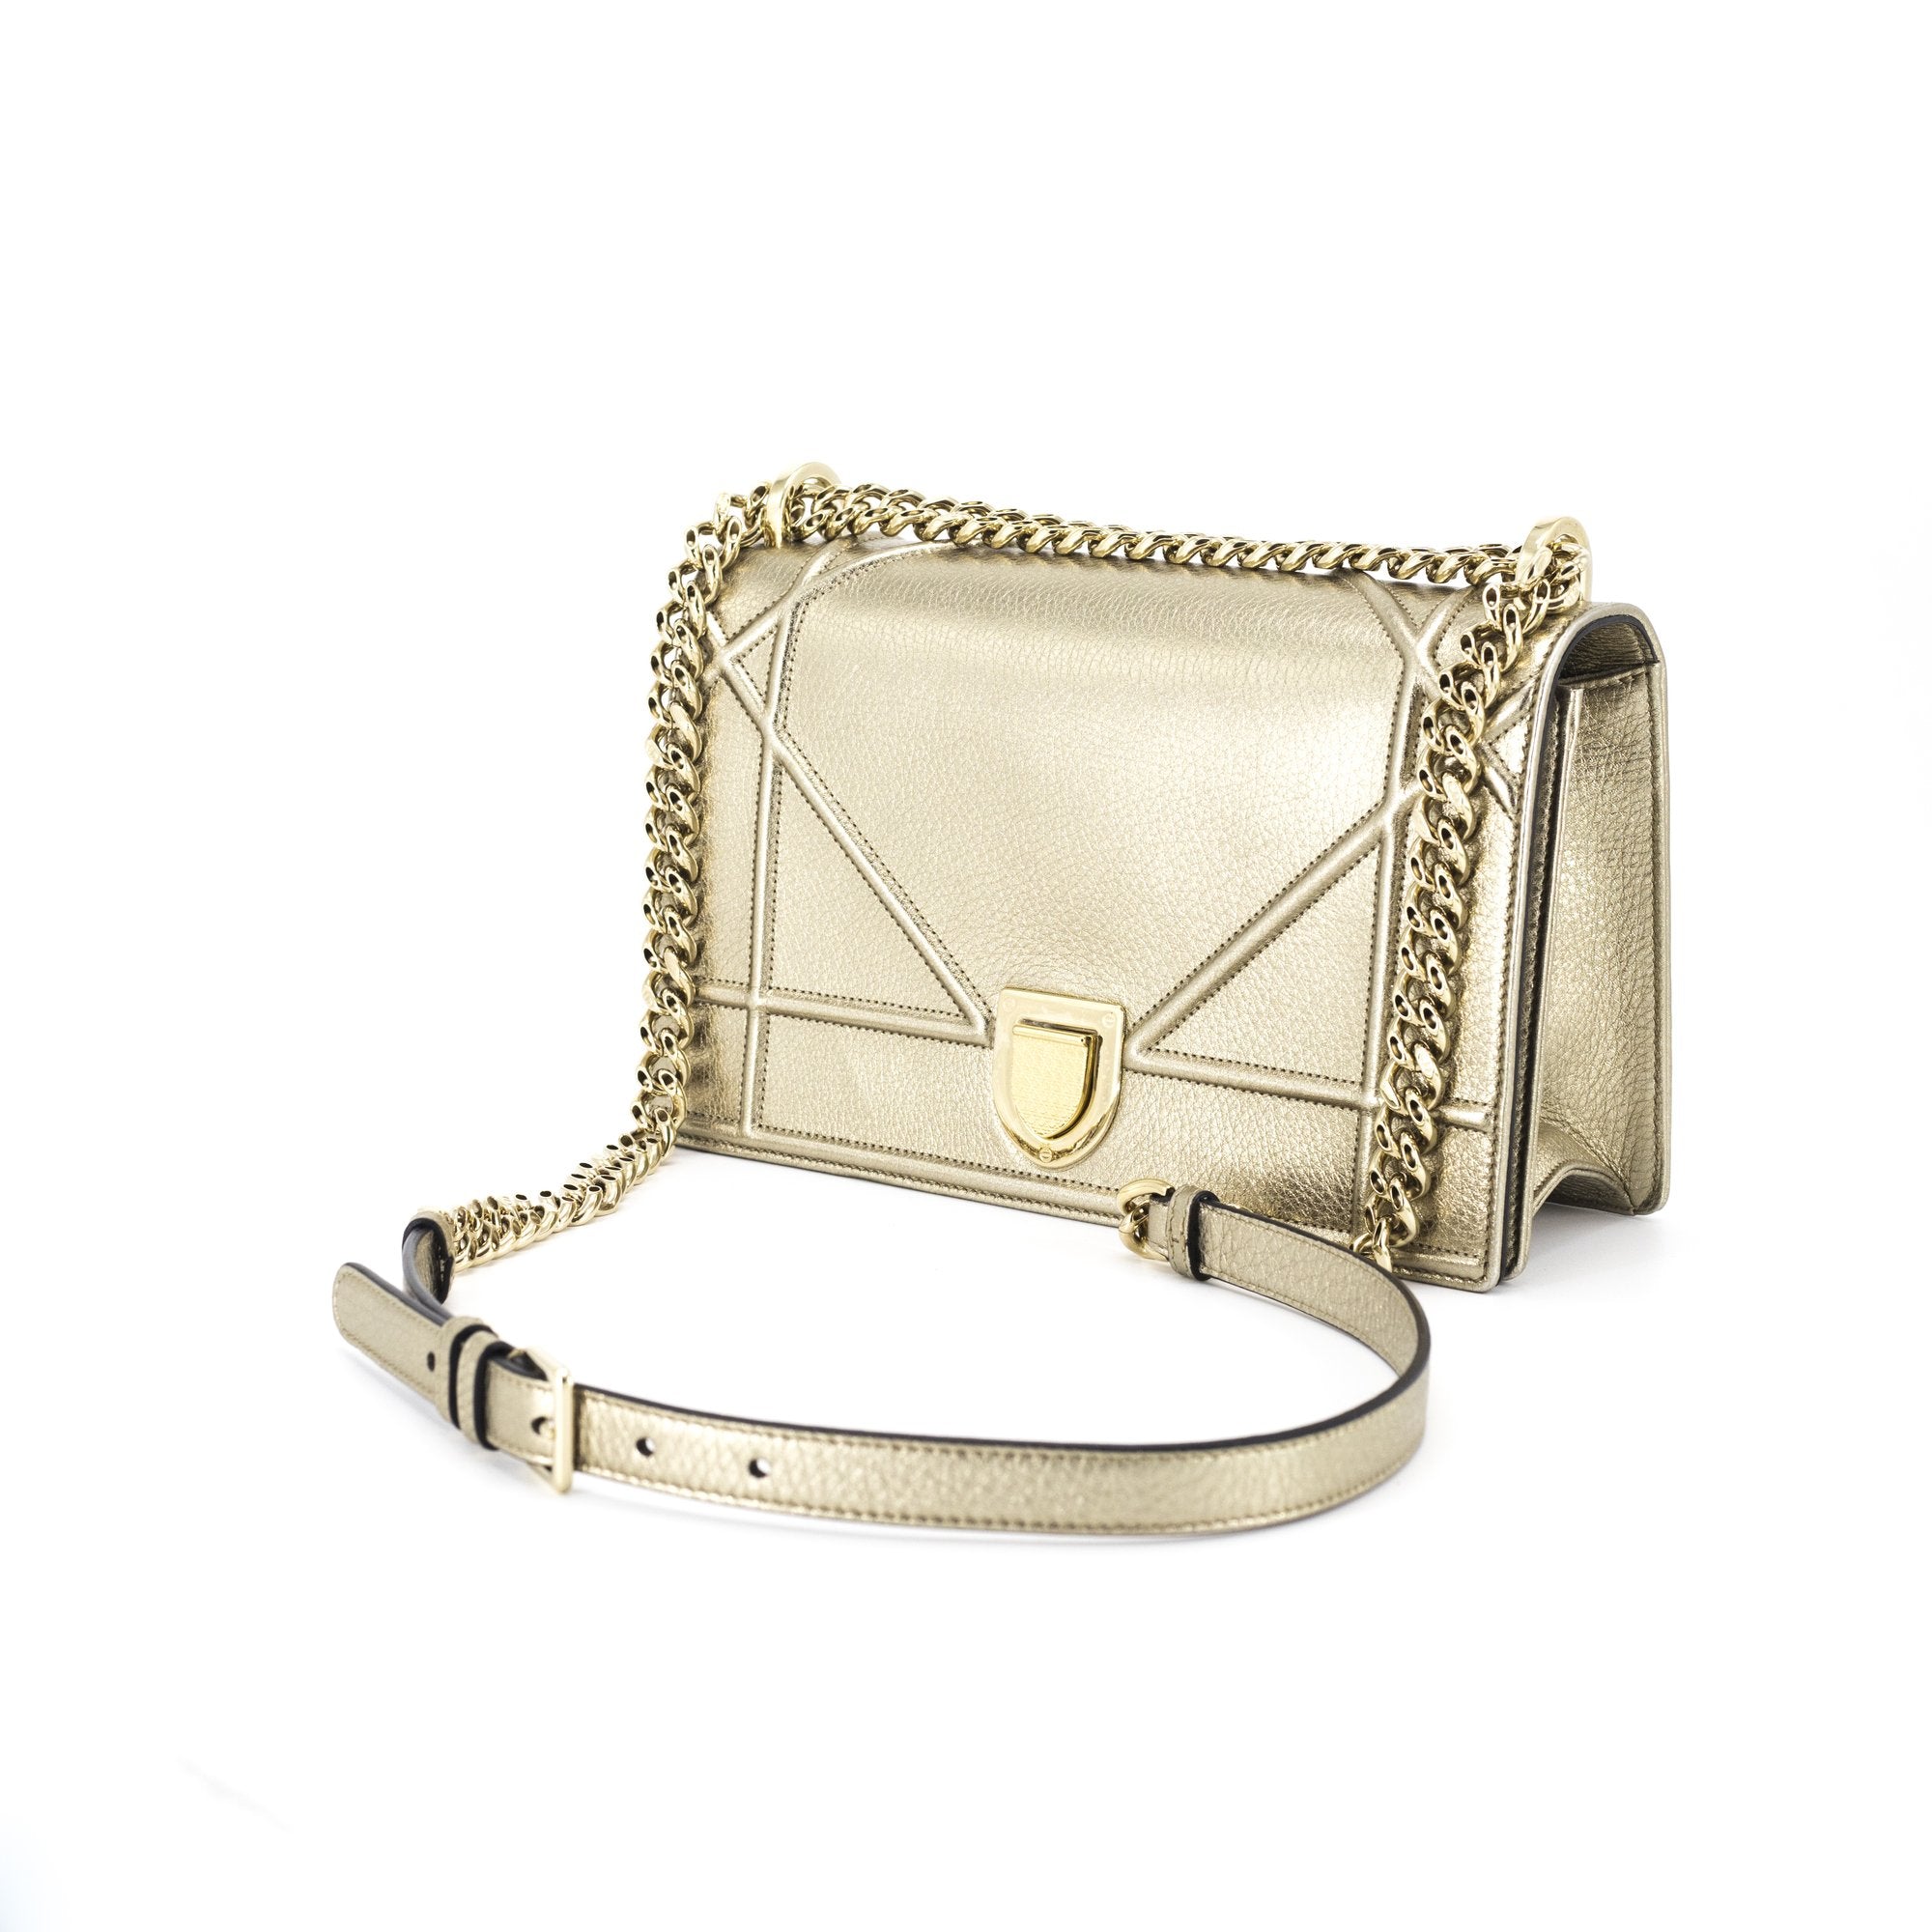 Dior Diorama Flap Bag in Rose Gold Copper Metallic Calfskin with Champagne  Gold Hardware - SOLD